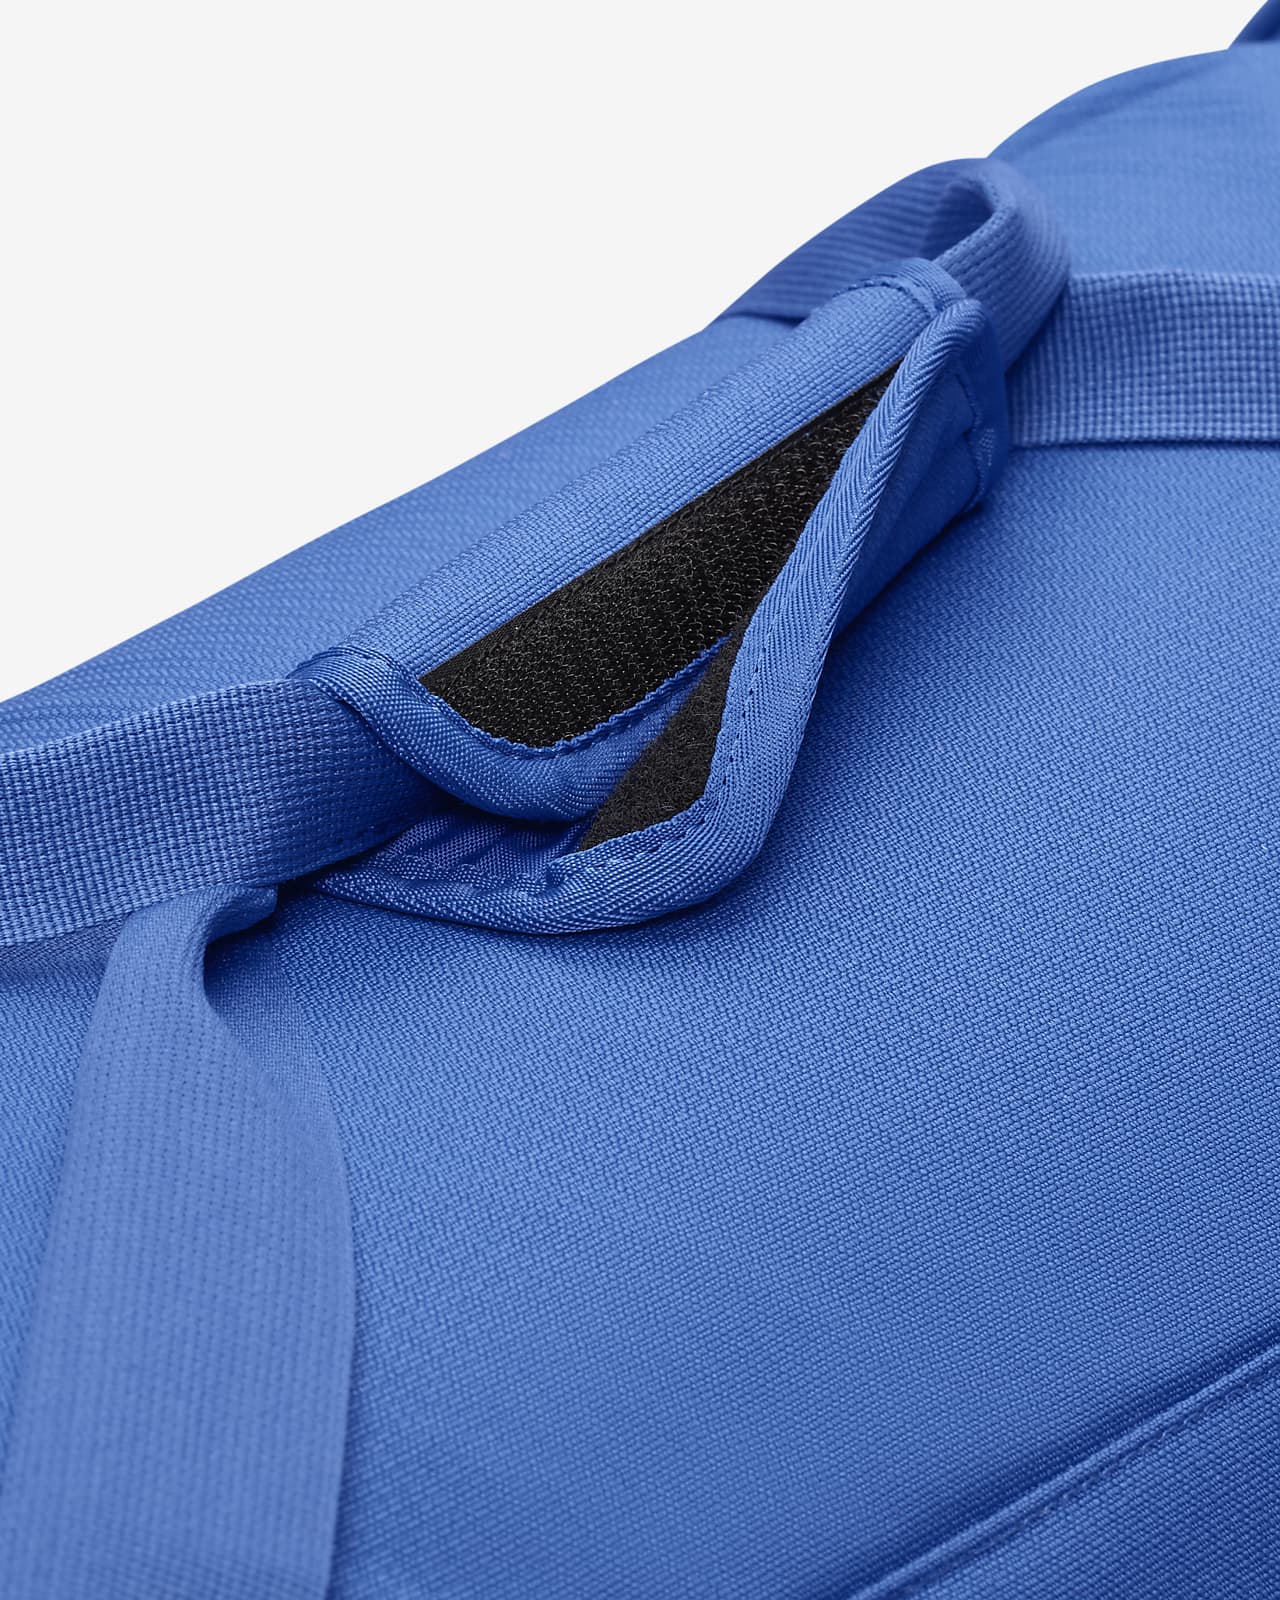 Nike Brasilia 9.5 Training Duffel Bag (Medium, 60L) Hyper Royal / Blac